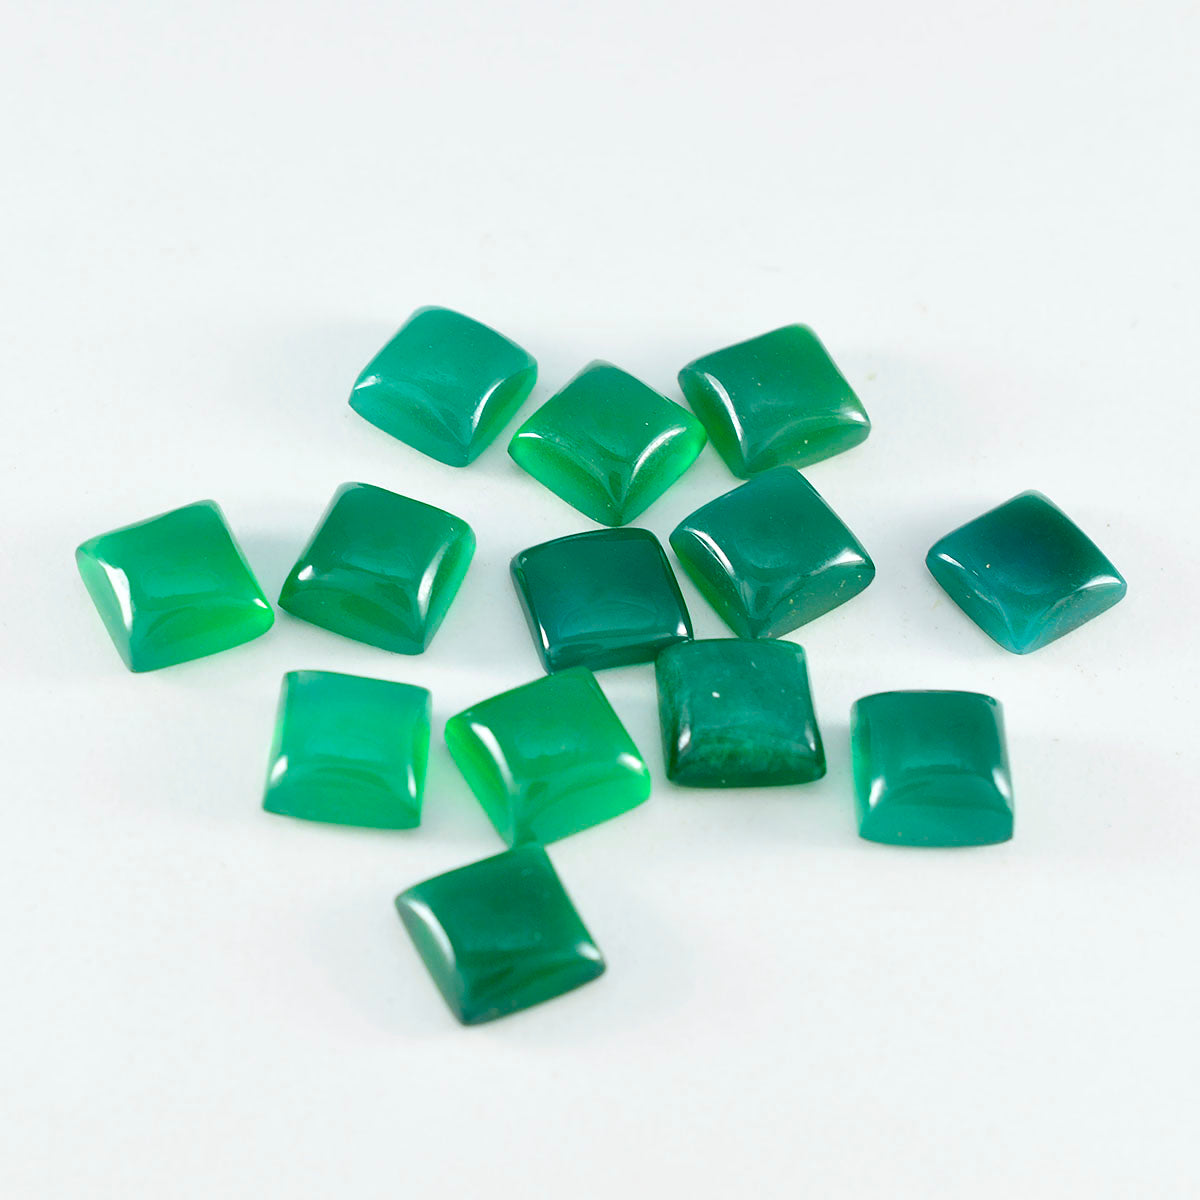 Riyogems 1PC Green Onyx Cabochon 4x4 mm Square Shape A+1 Quality Gemstone